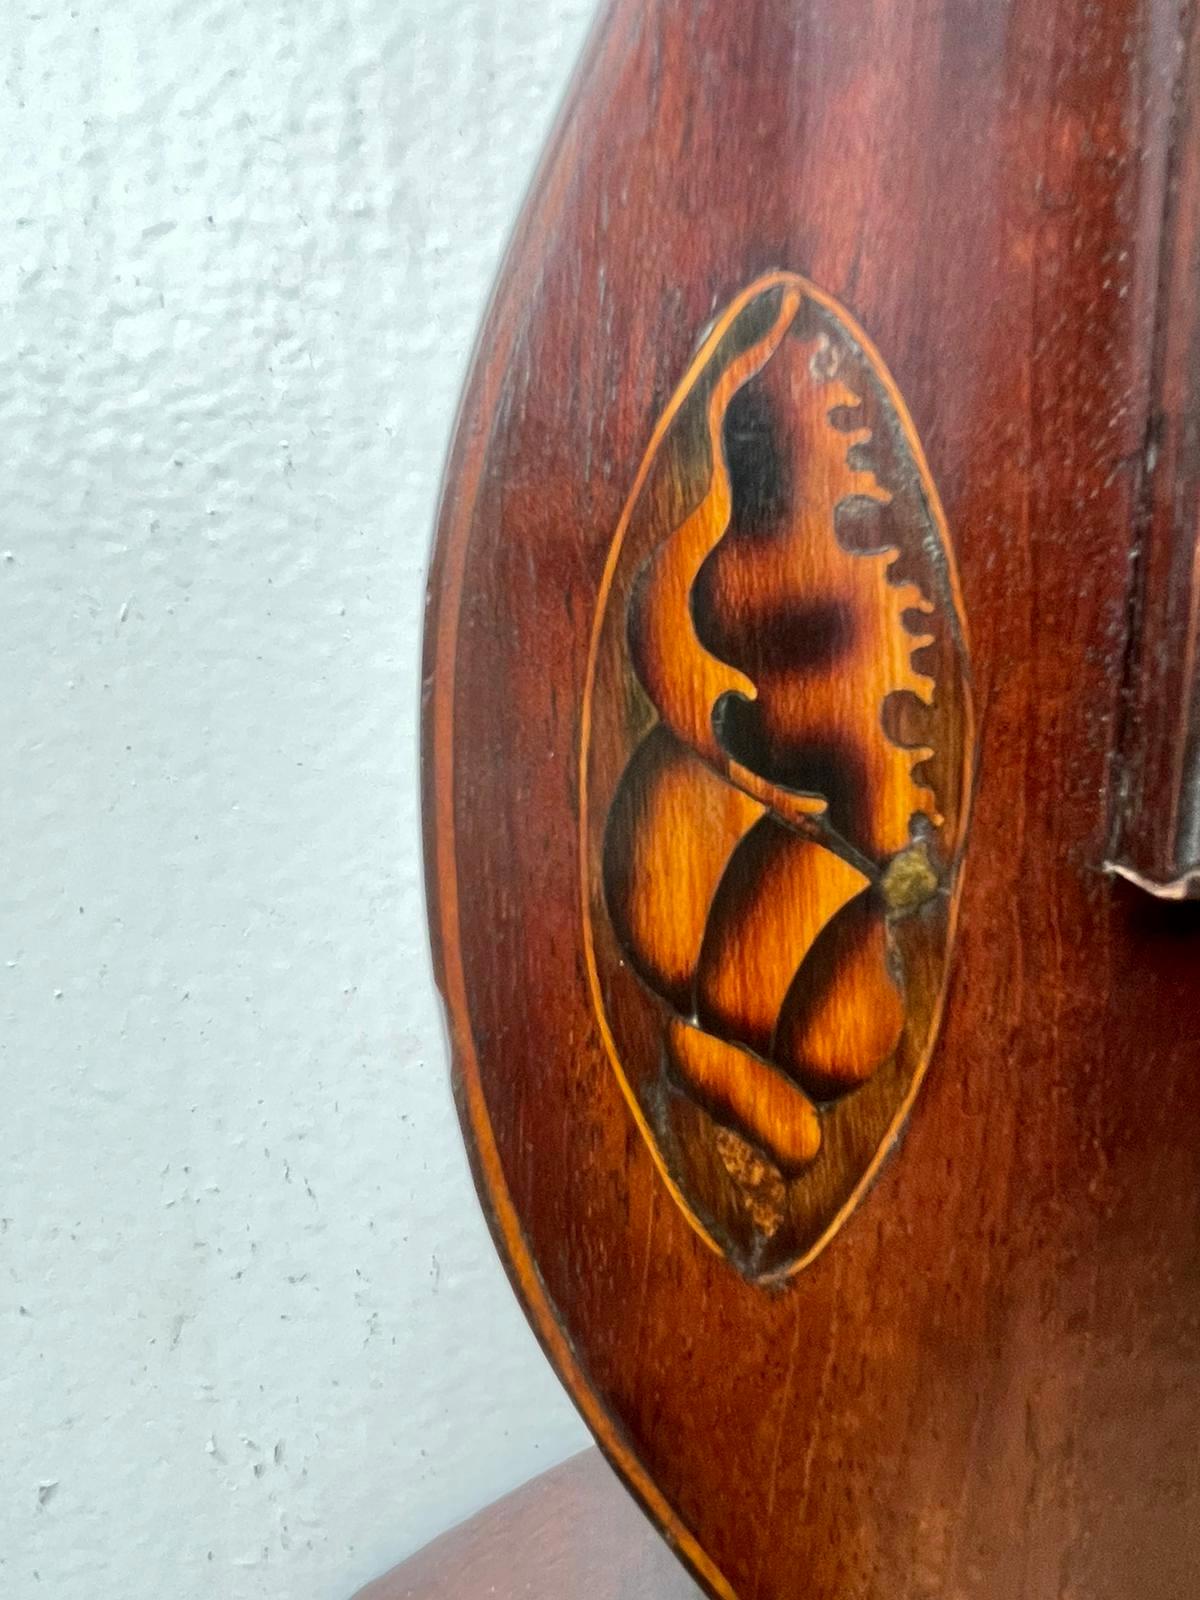 Antique George III Mahogany Banjo Barometer For Sale 1